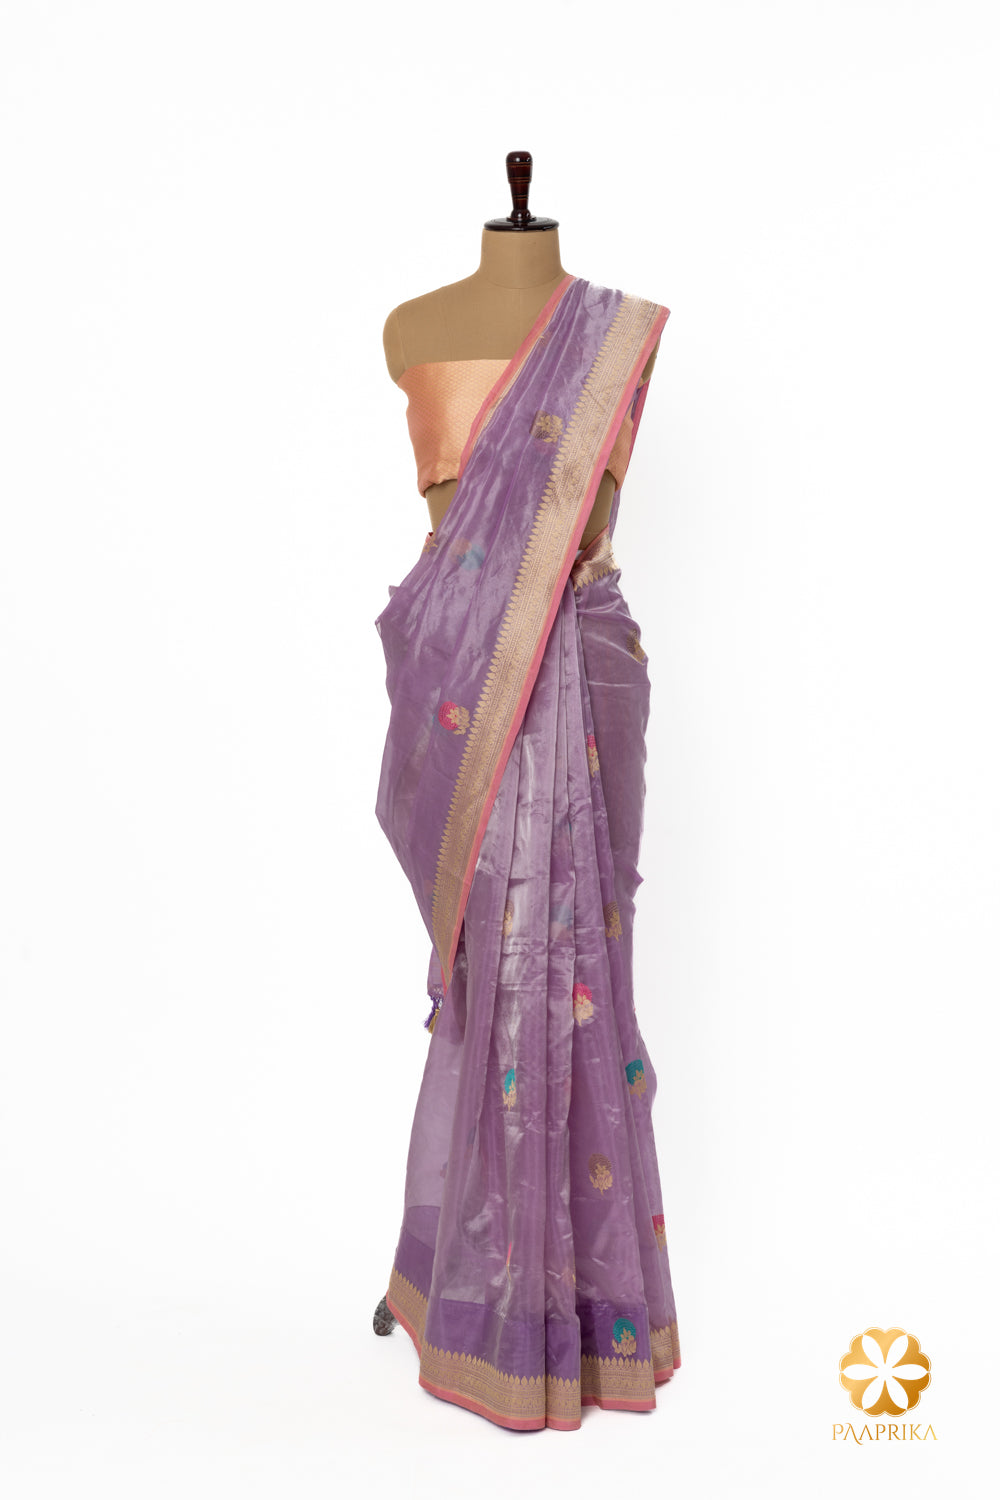 Luxurious tissue fabric of the lavender Banarasi saree, ensuring comfort.